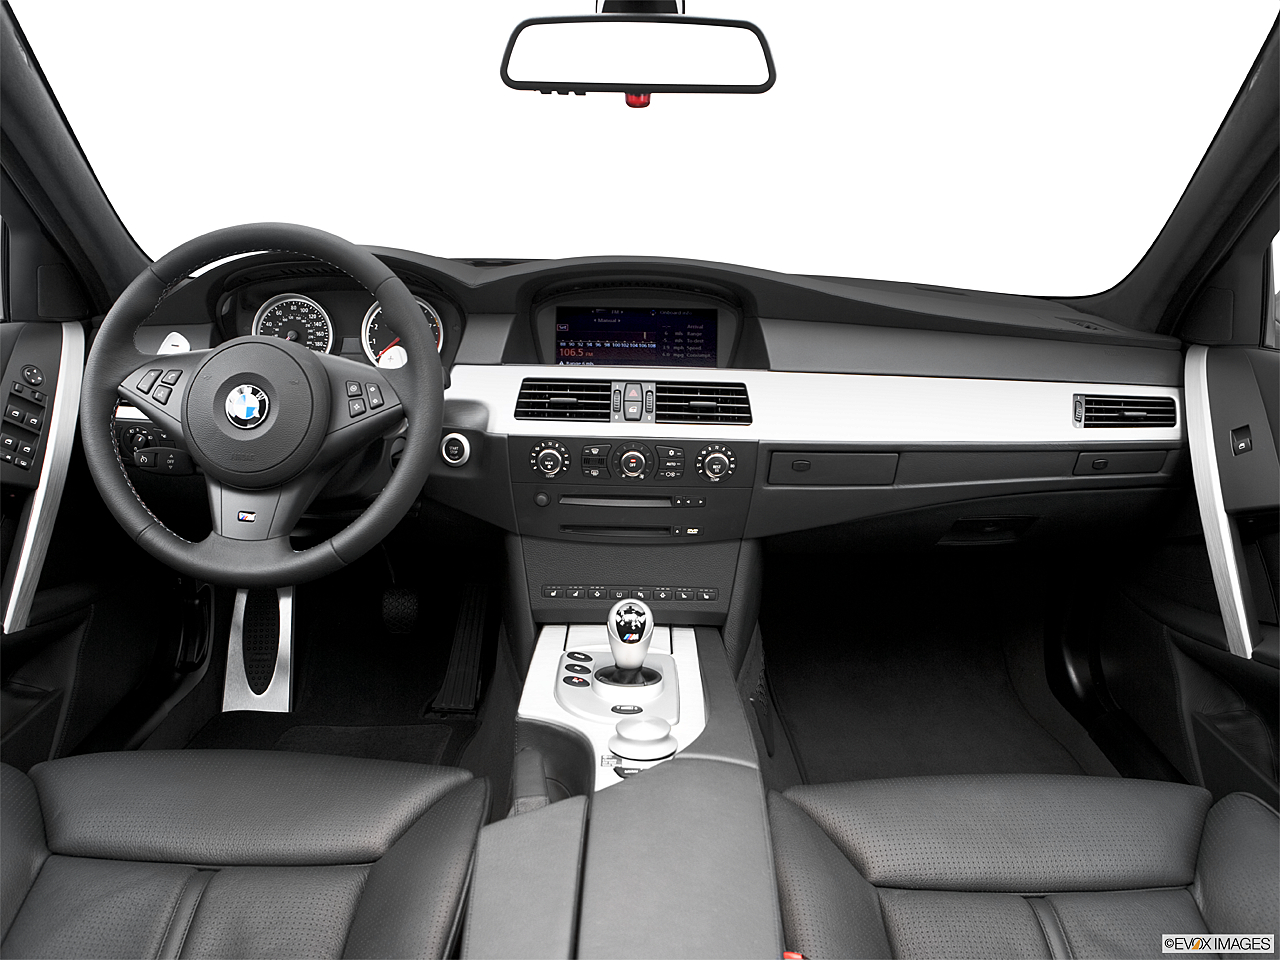 2006 BMW M5 4dr Sedan - Research - GrooveCar